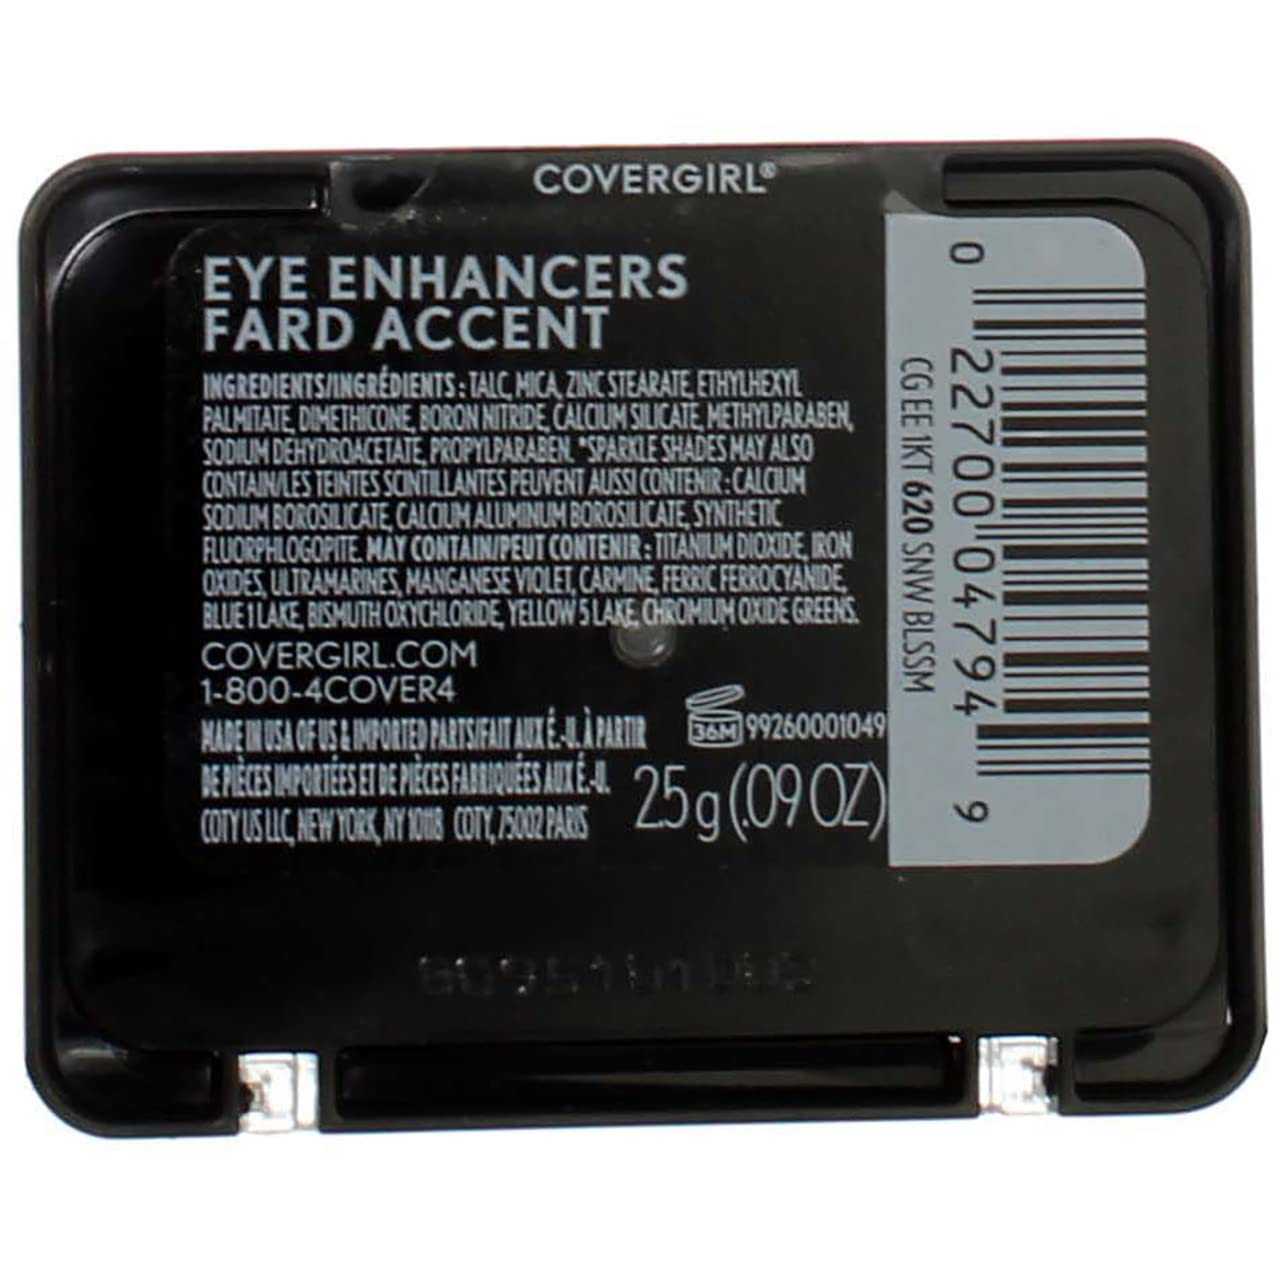 COVERGIRL - Eye Enhancers 1-Kit Eyeshadow, silky, sheer formula, double ended applicator, 100% Cruelty-free